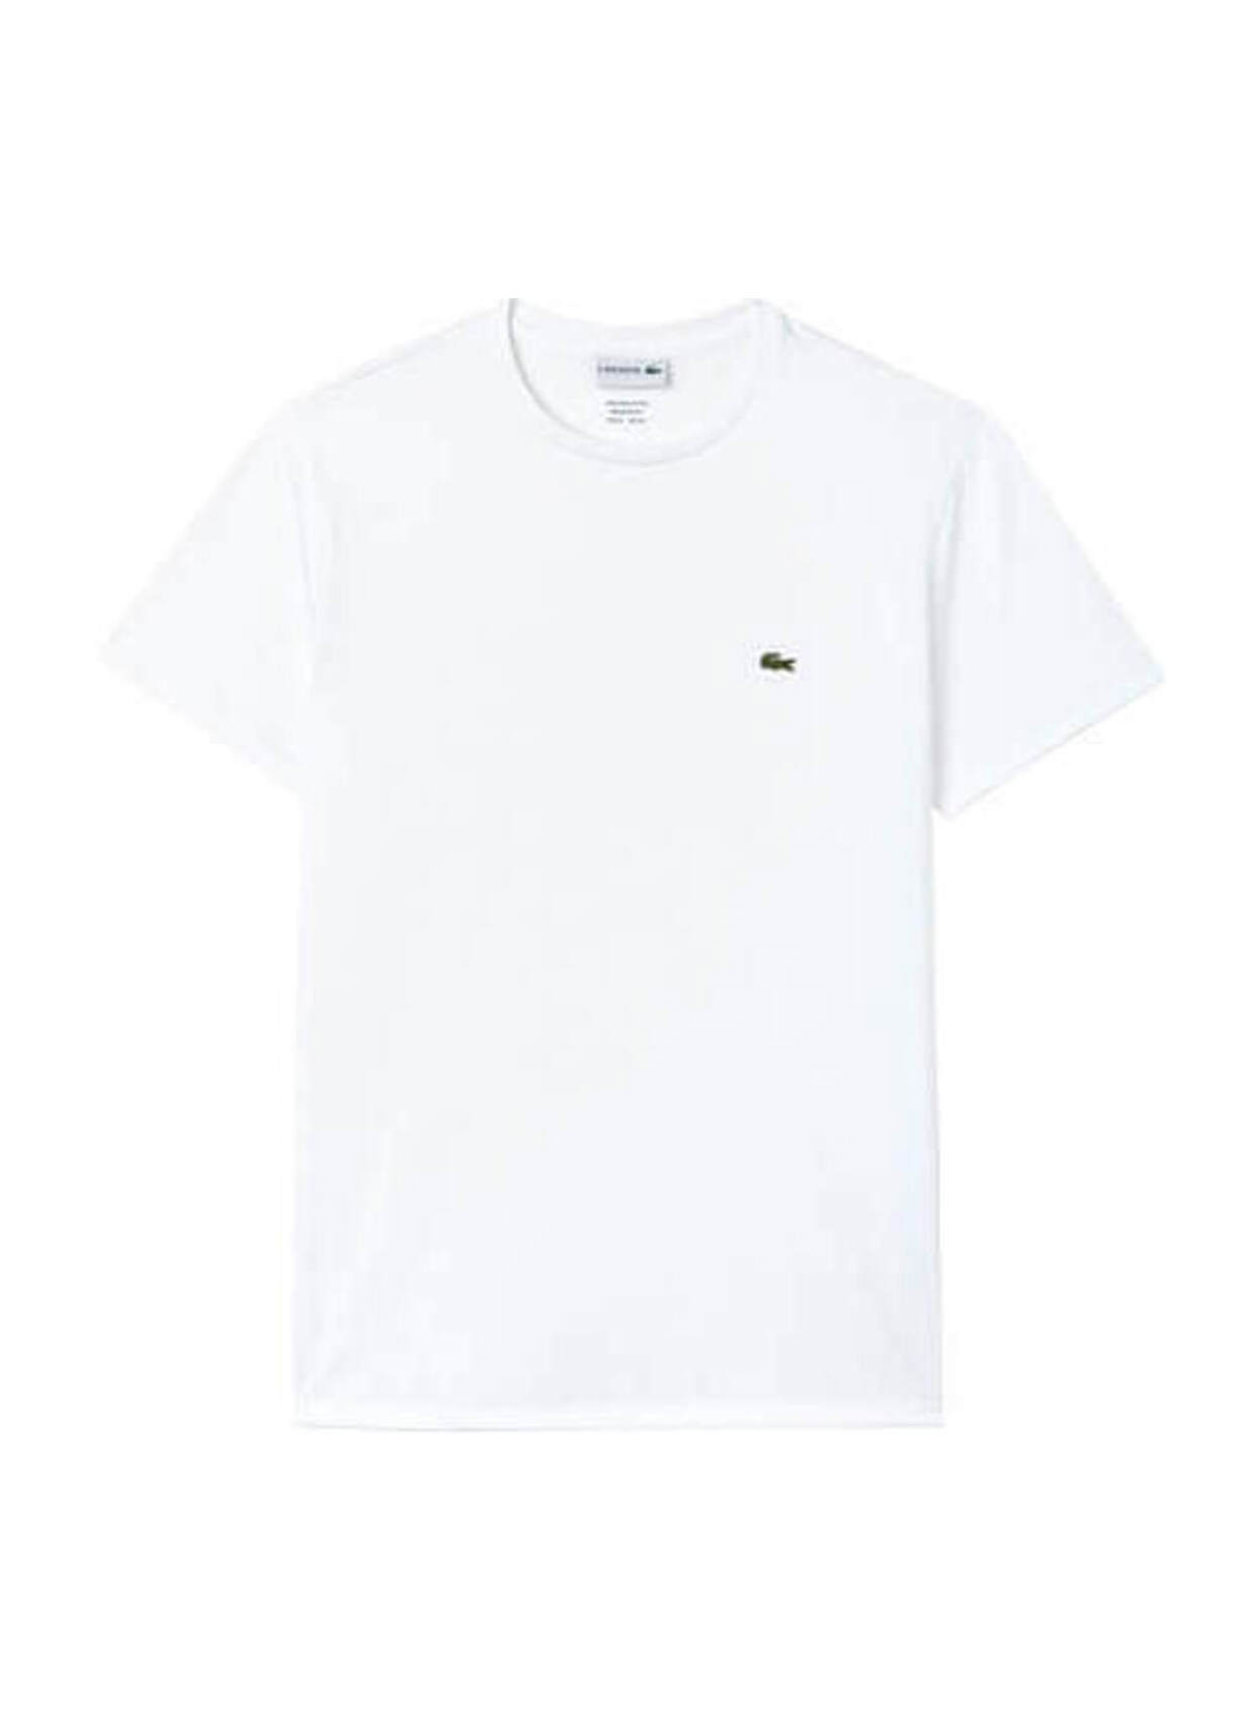 Lacoste Men's White Crew Neck Pima Cotton T-Shirt